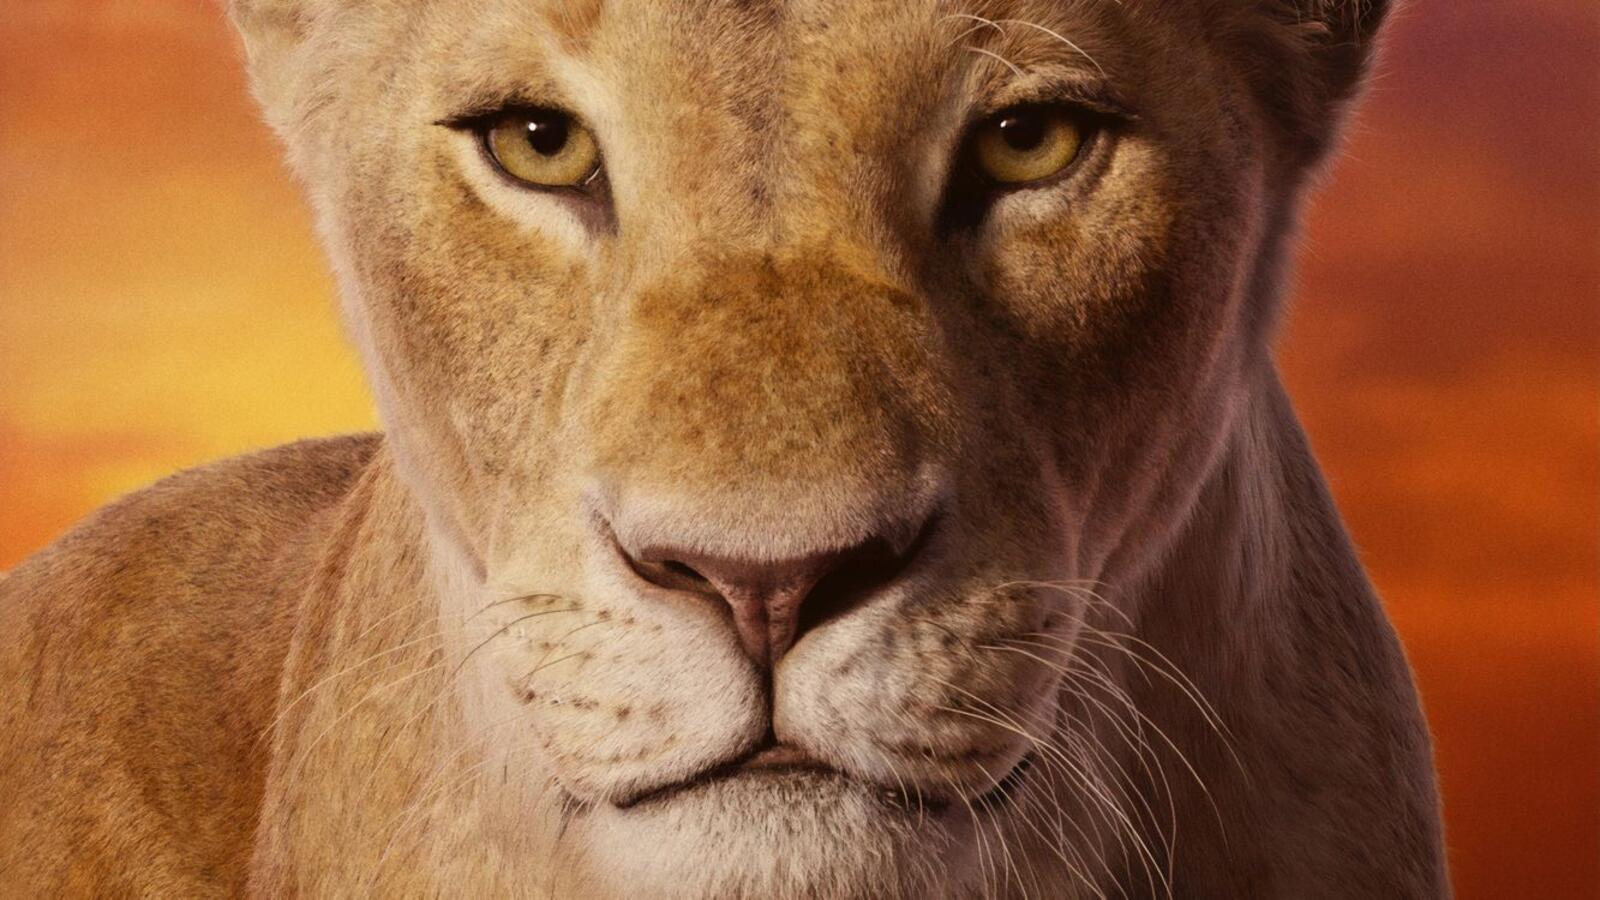 Wallpapers Simba movies lion king on the desktop